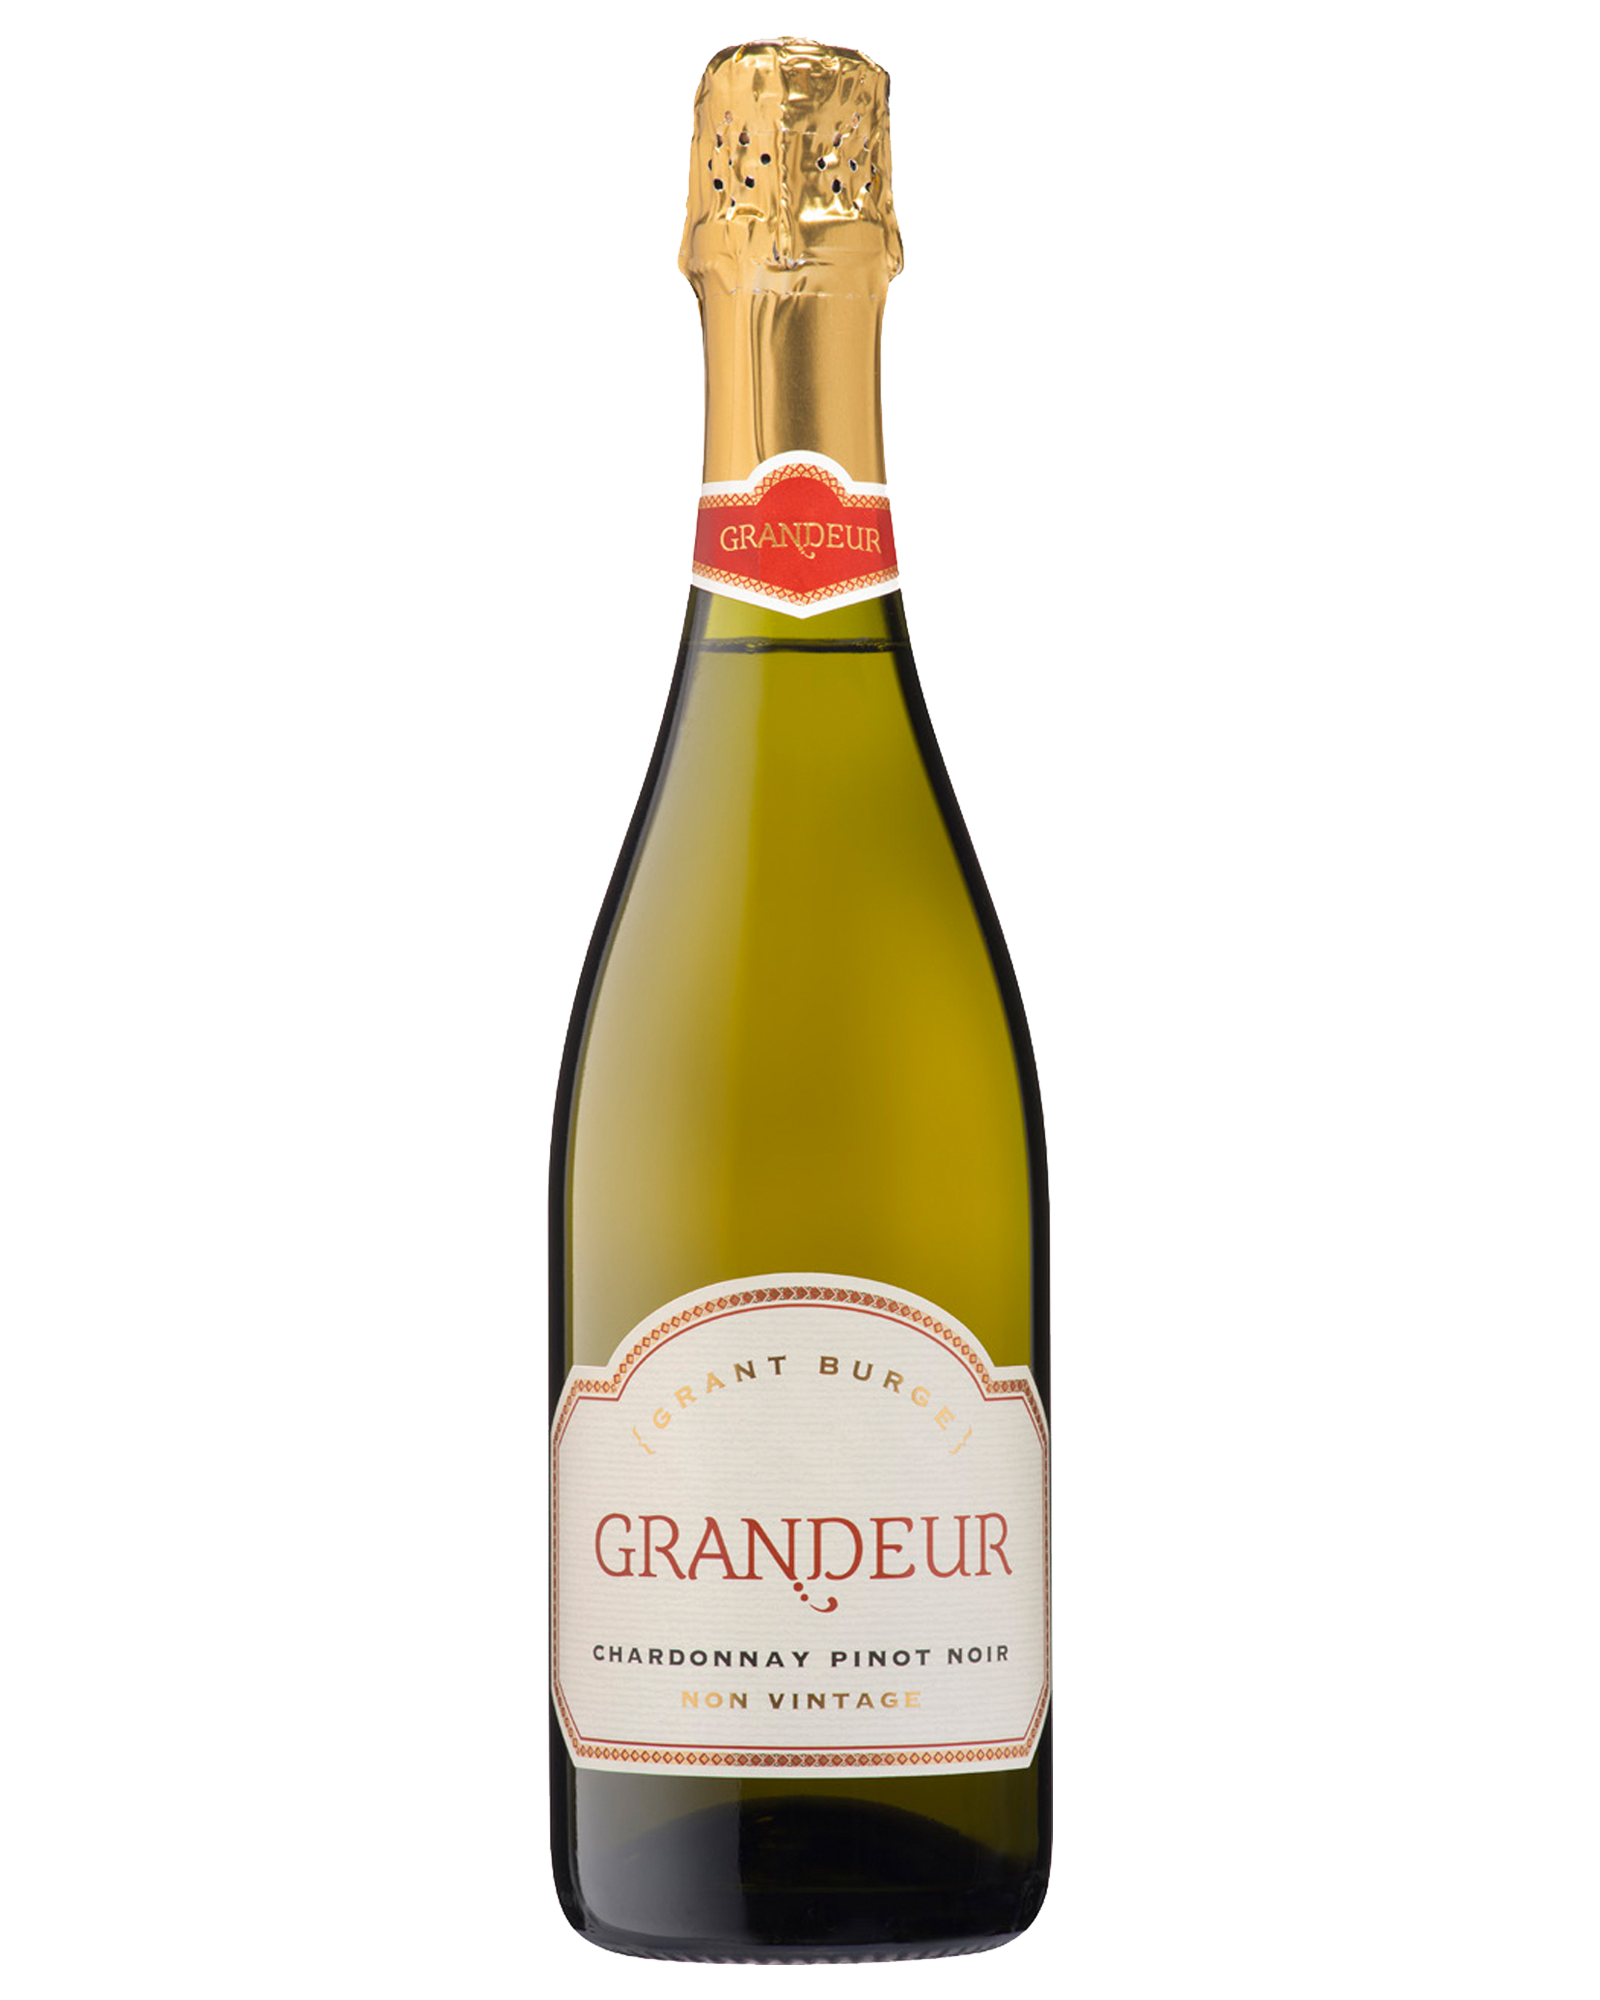 Grant Burge Grandeur Chardonnay Pinot Noir